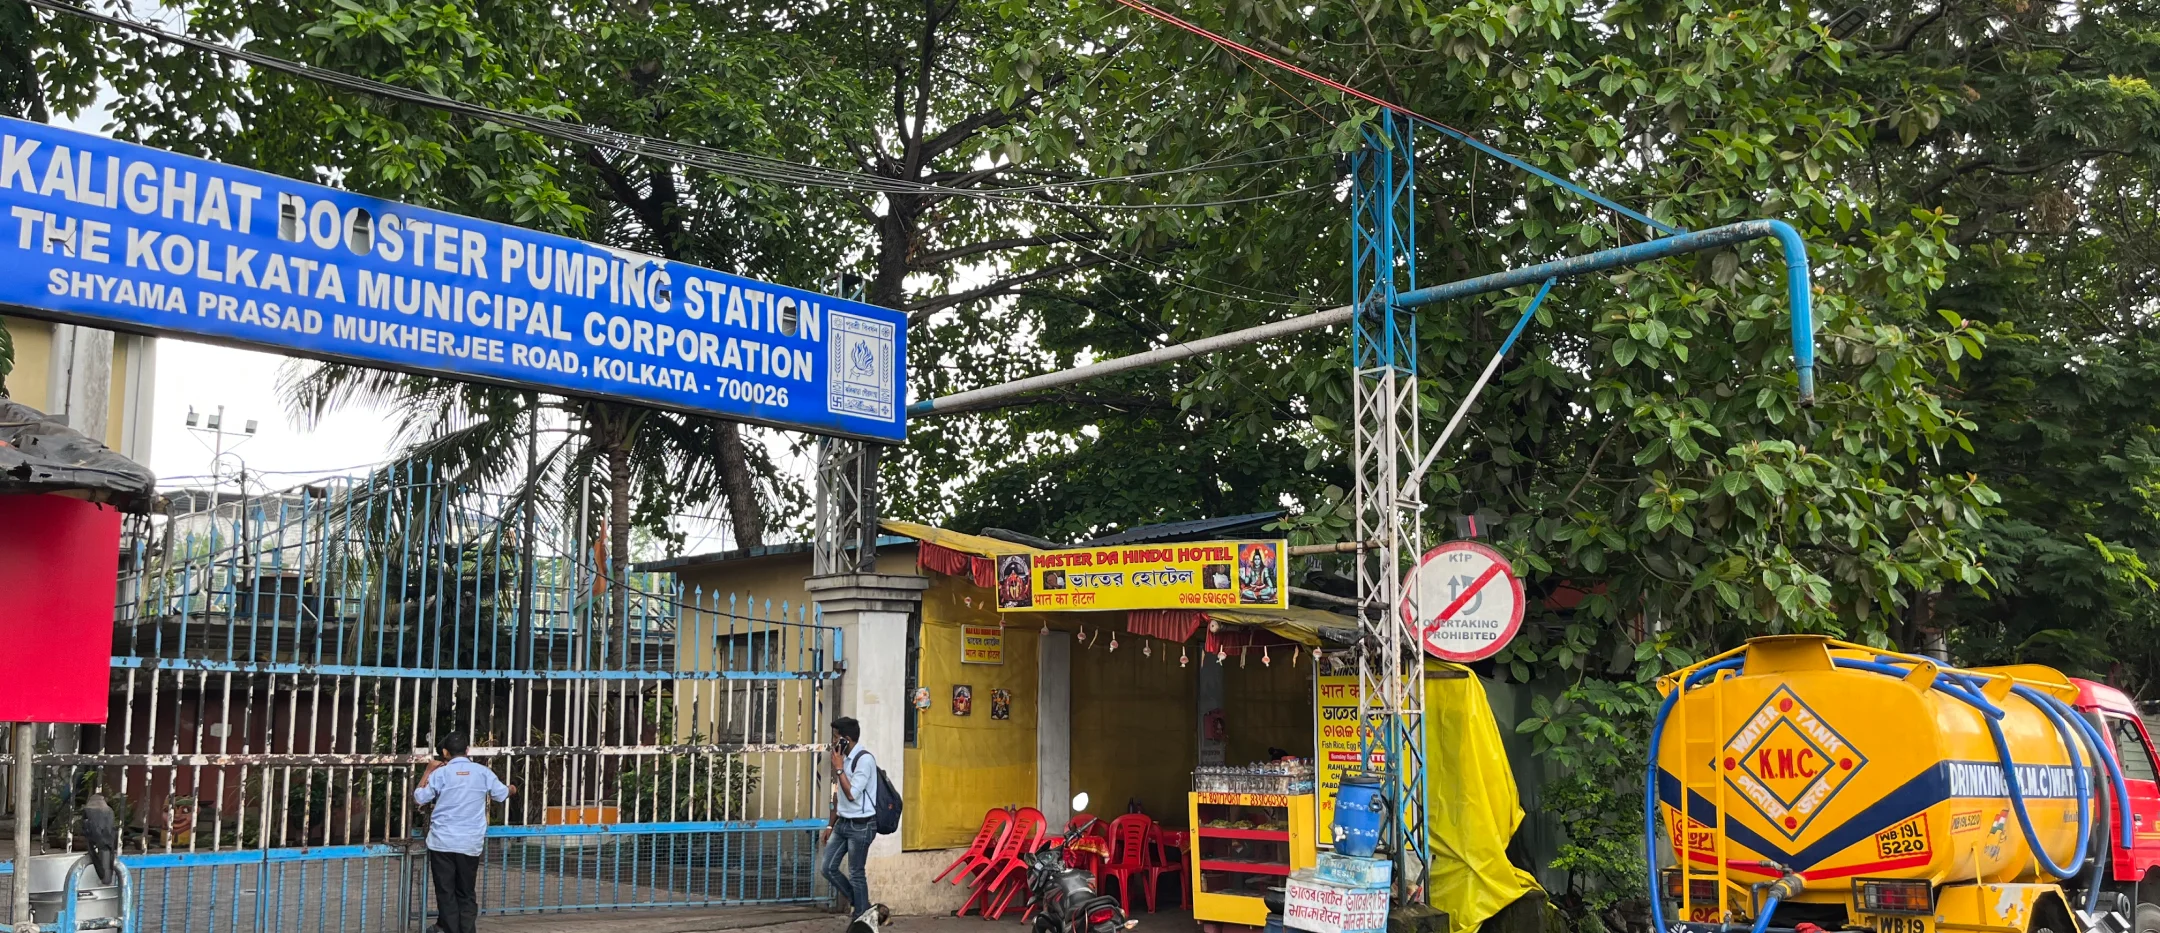 Kolkata’s water distribution system bangla